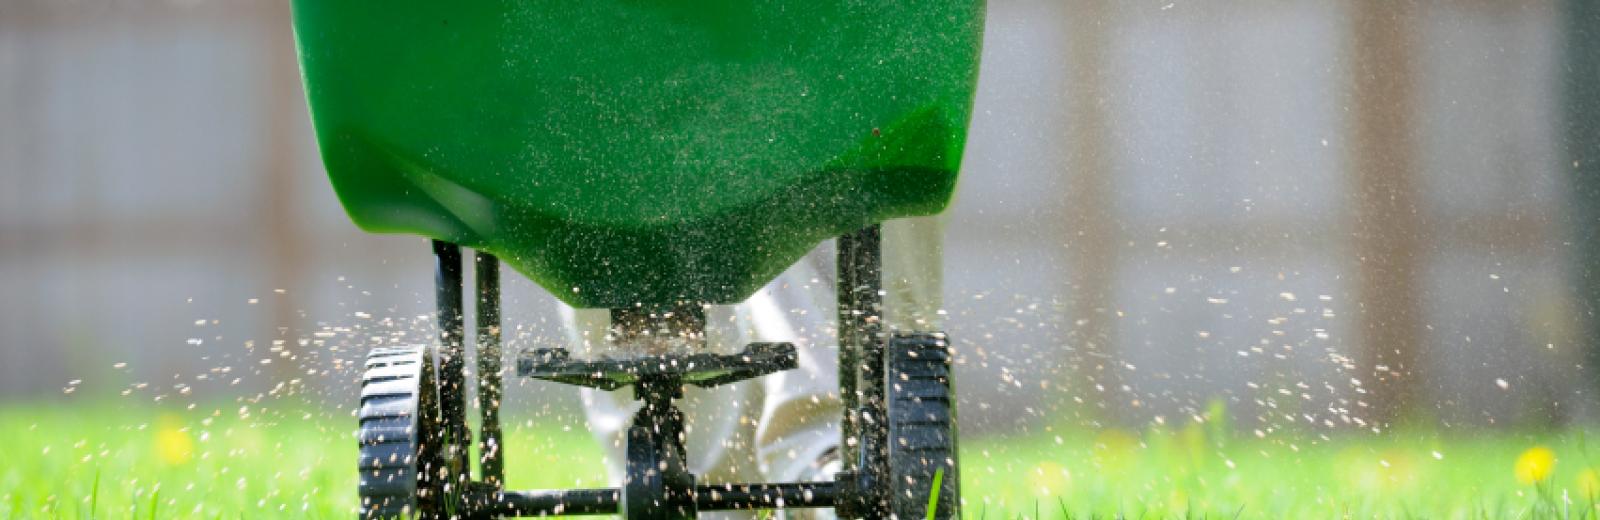 lawn technician applying fertilizer using a fertilizer spreader